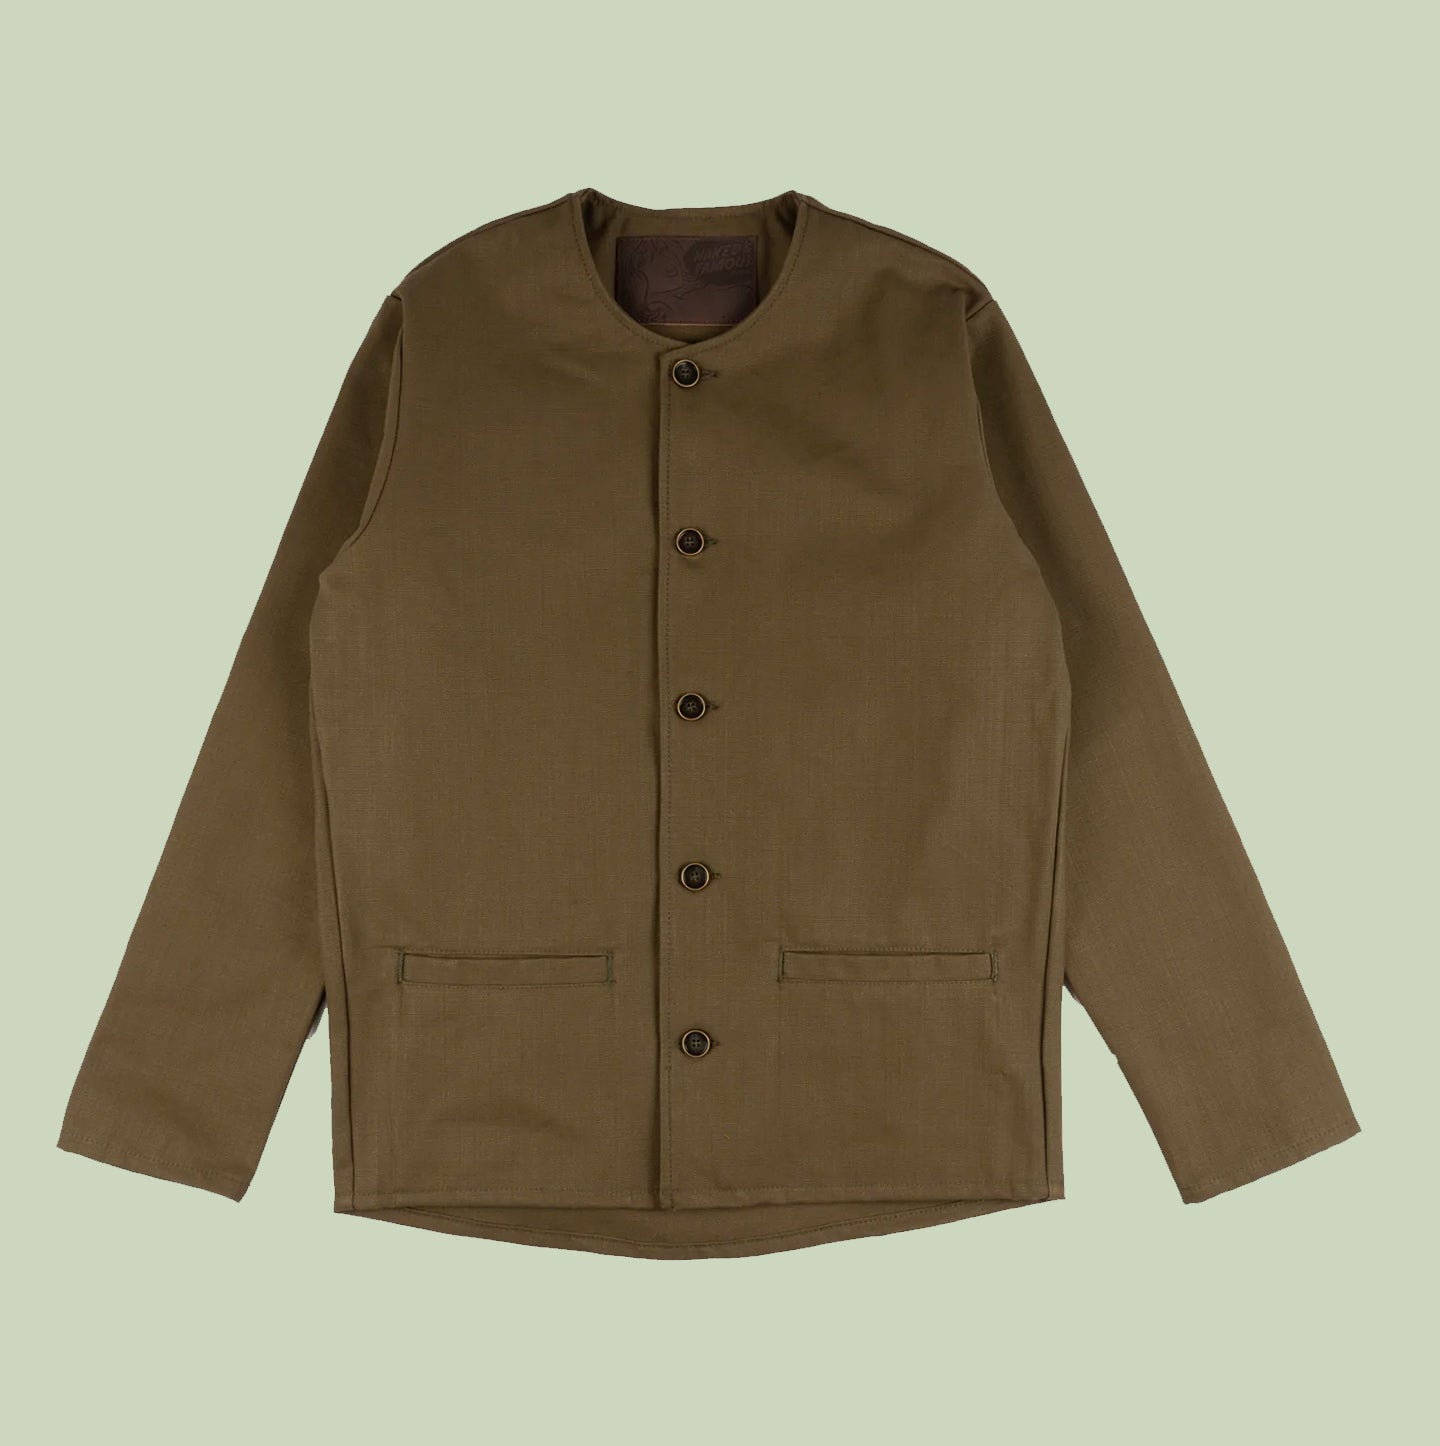 Smart Jacket - Raw Cotton Canvas - Olive